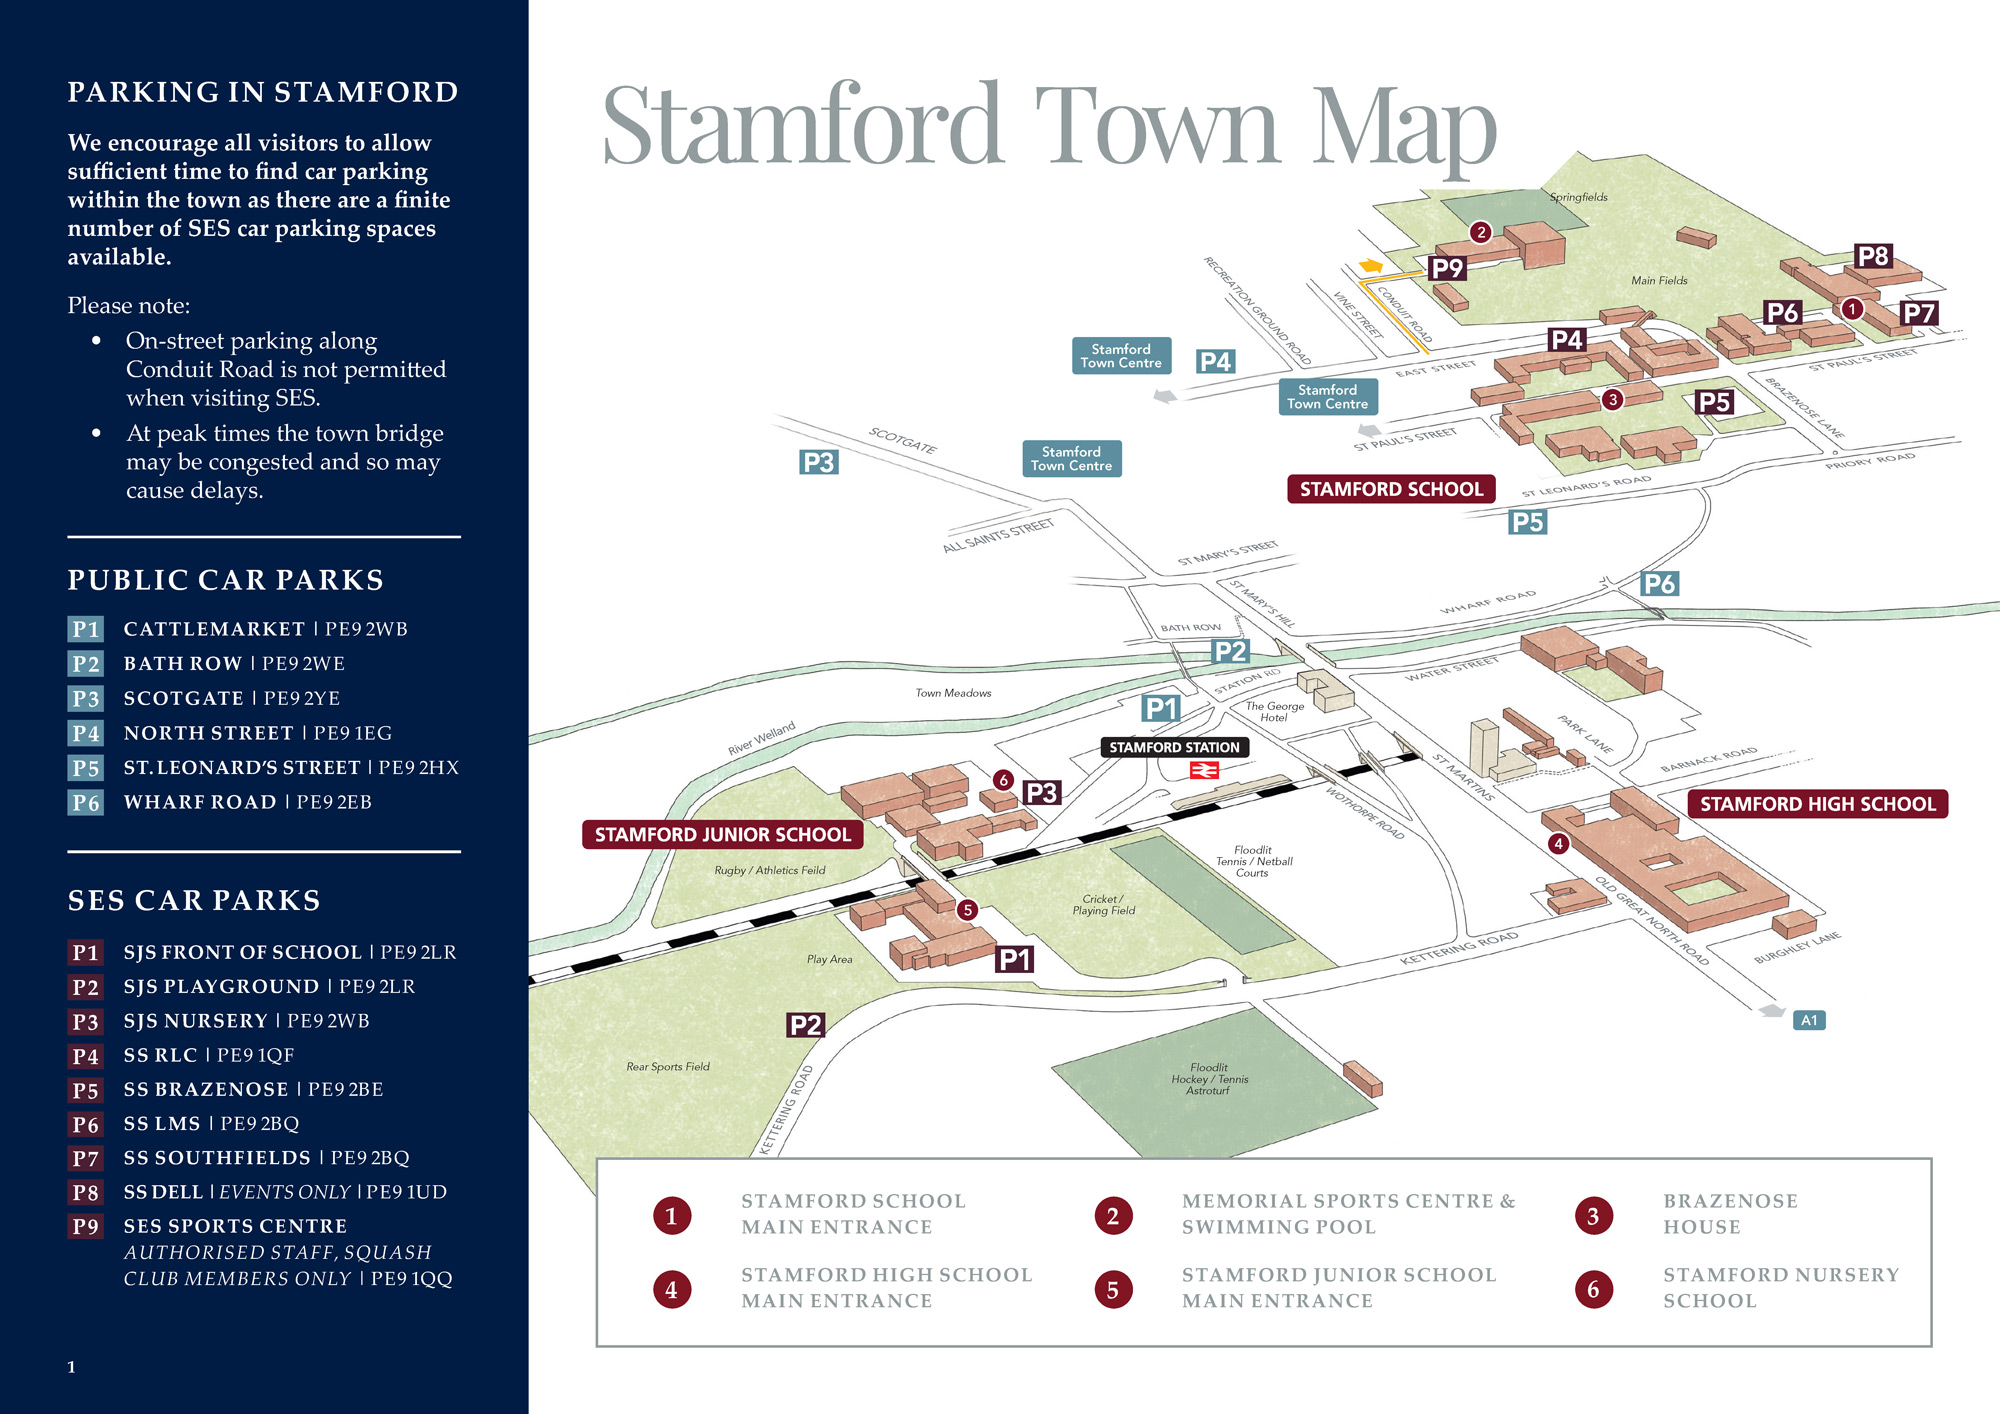 Parking Map of Stamford